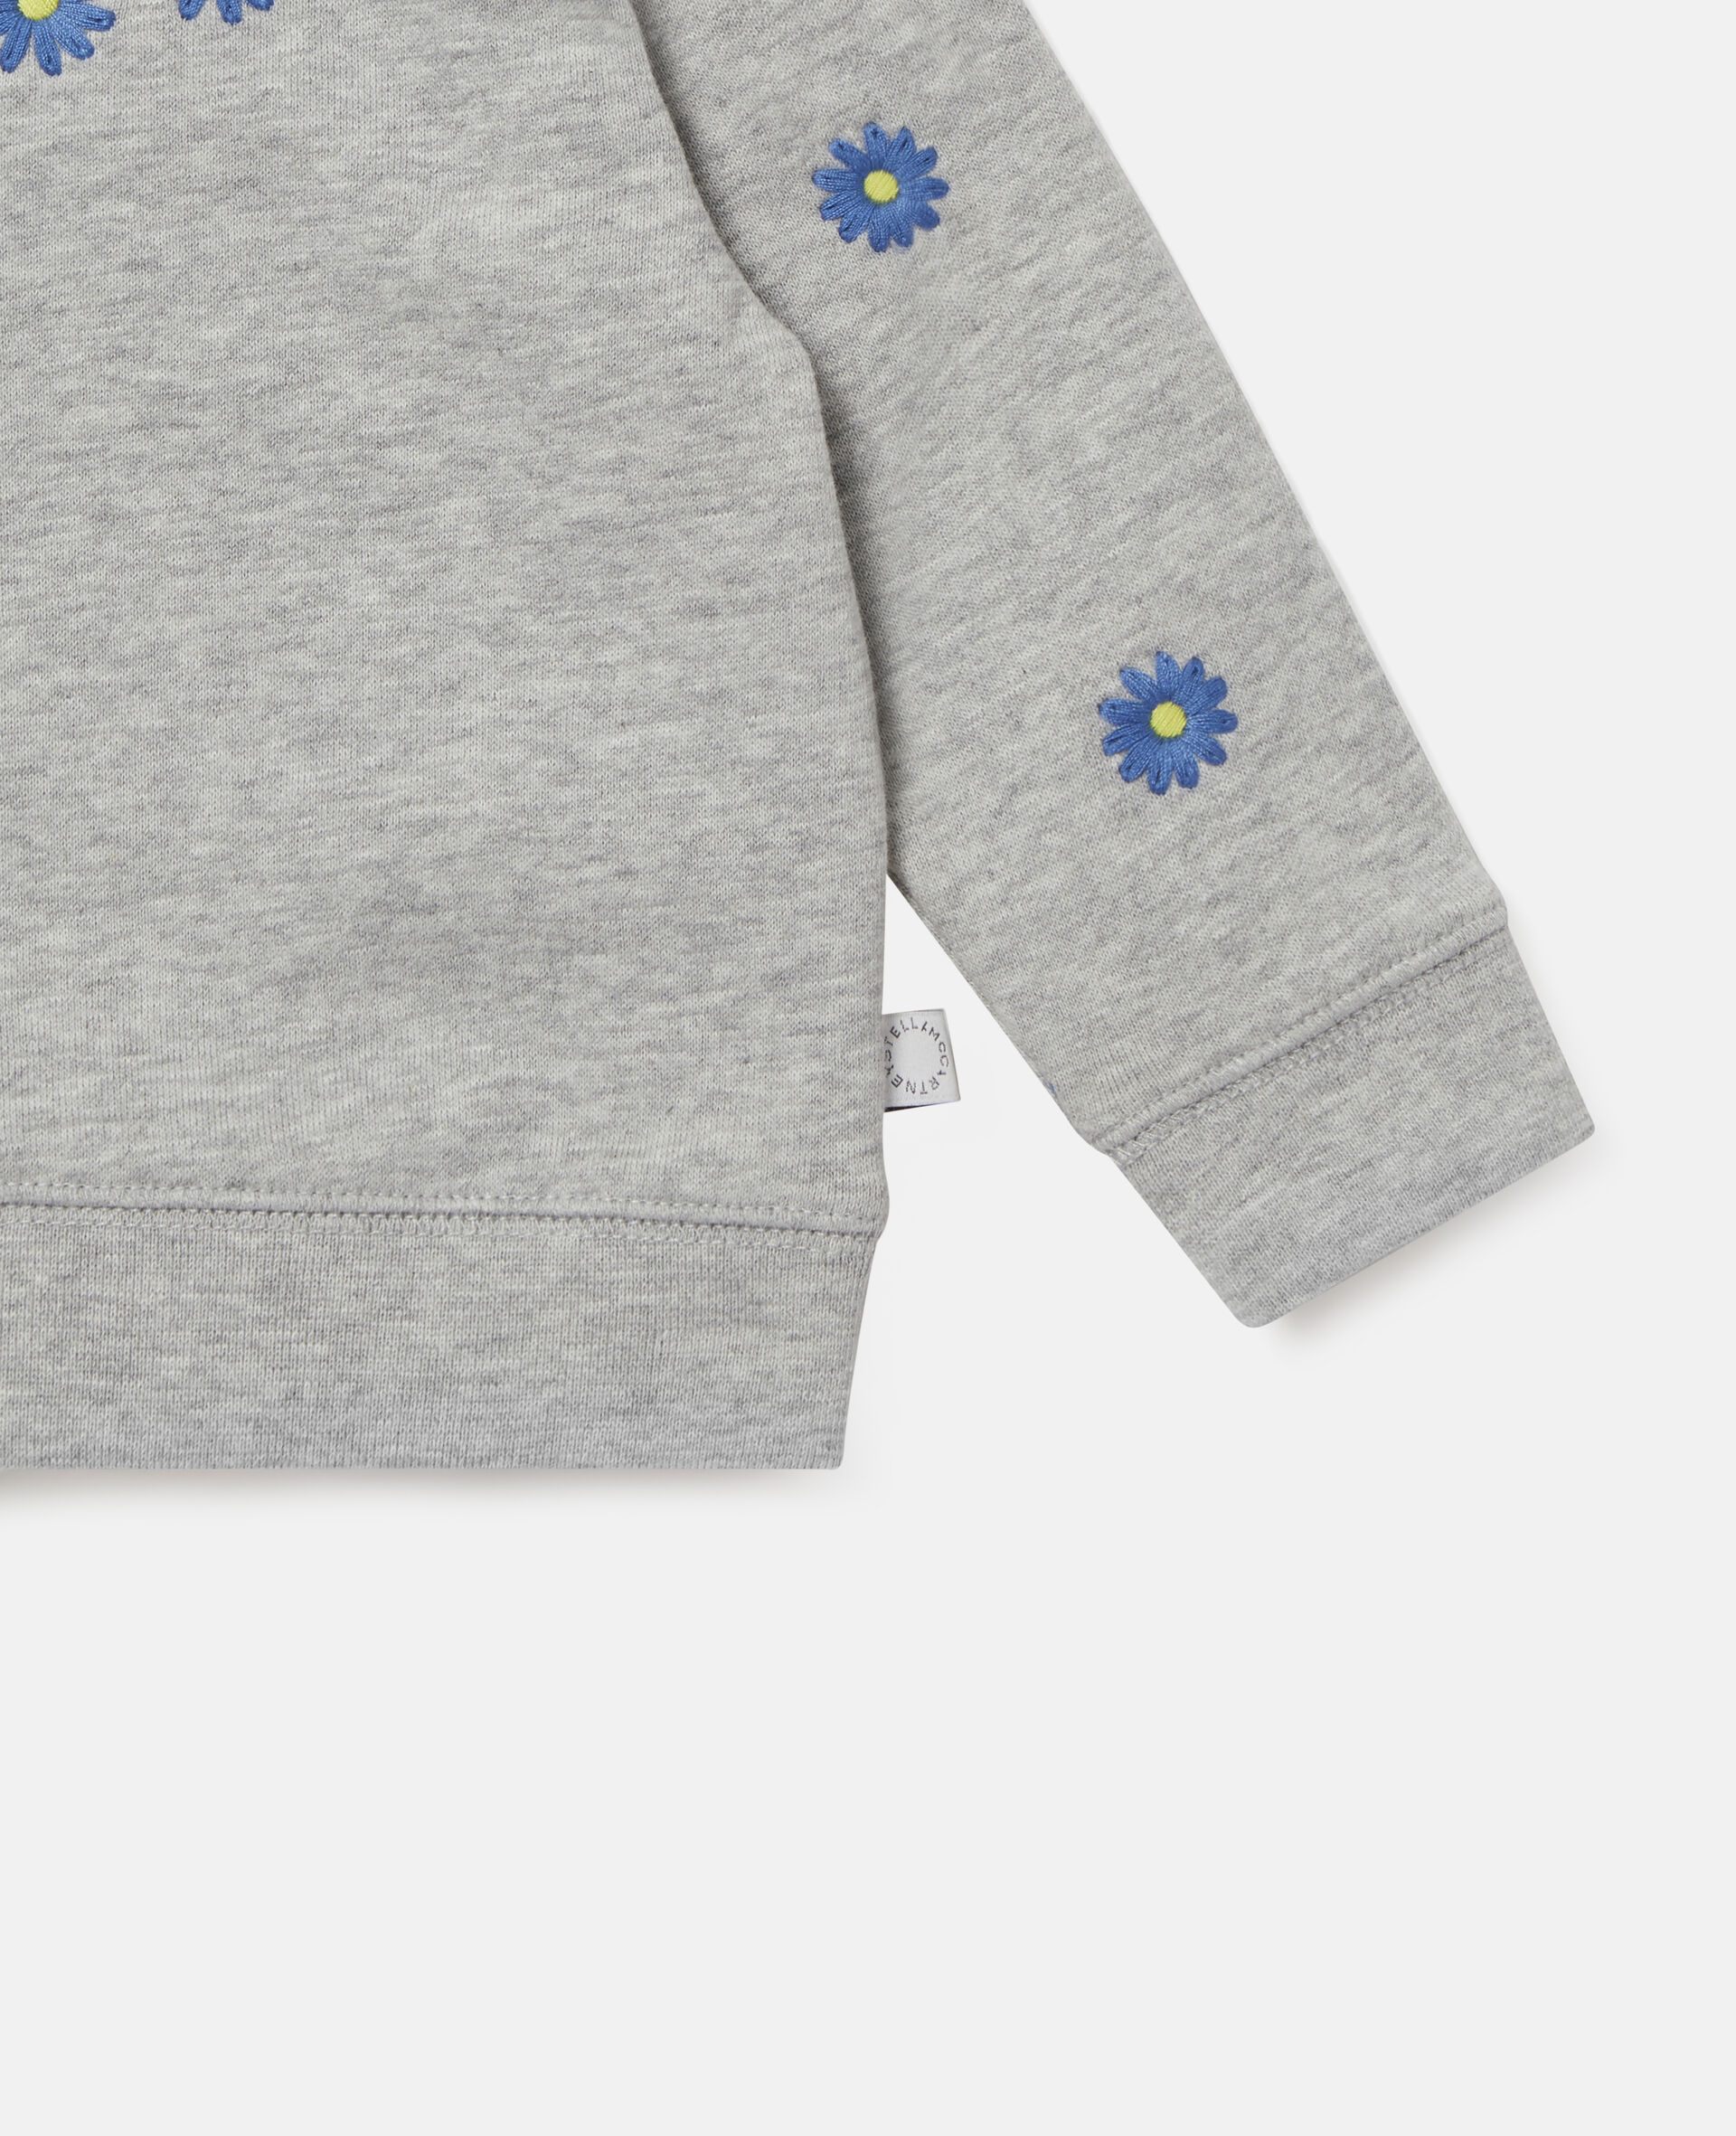 Embroidered Daisies Fleece Sweatshirt -Grey-large image number 2